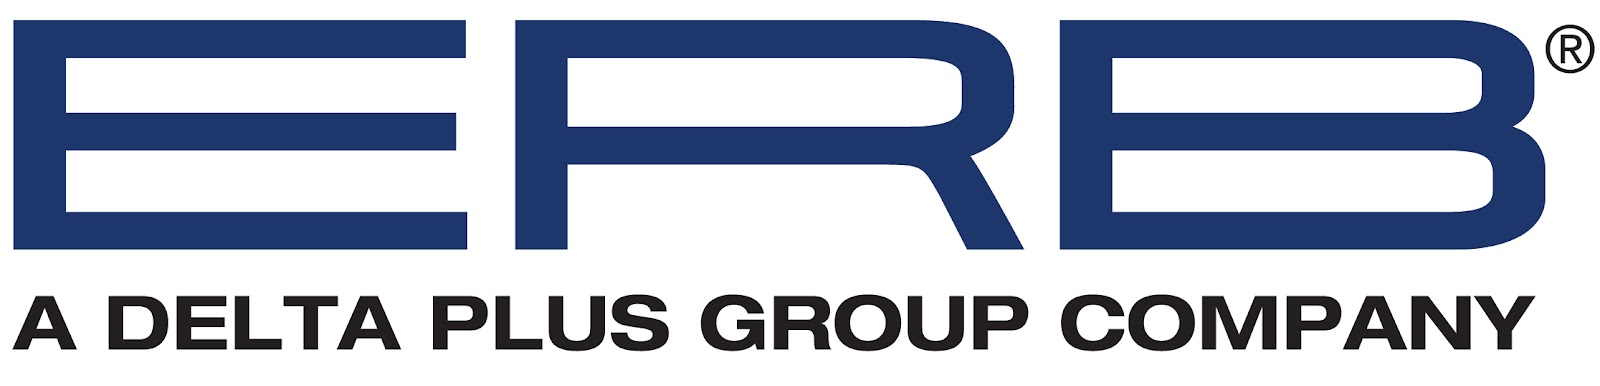 ERB Logo